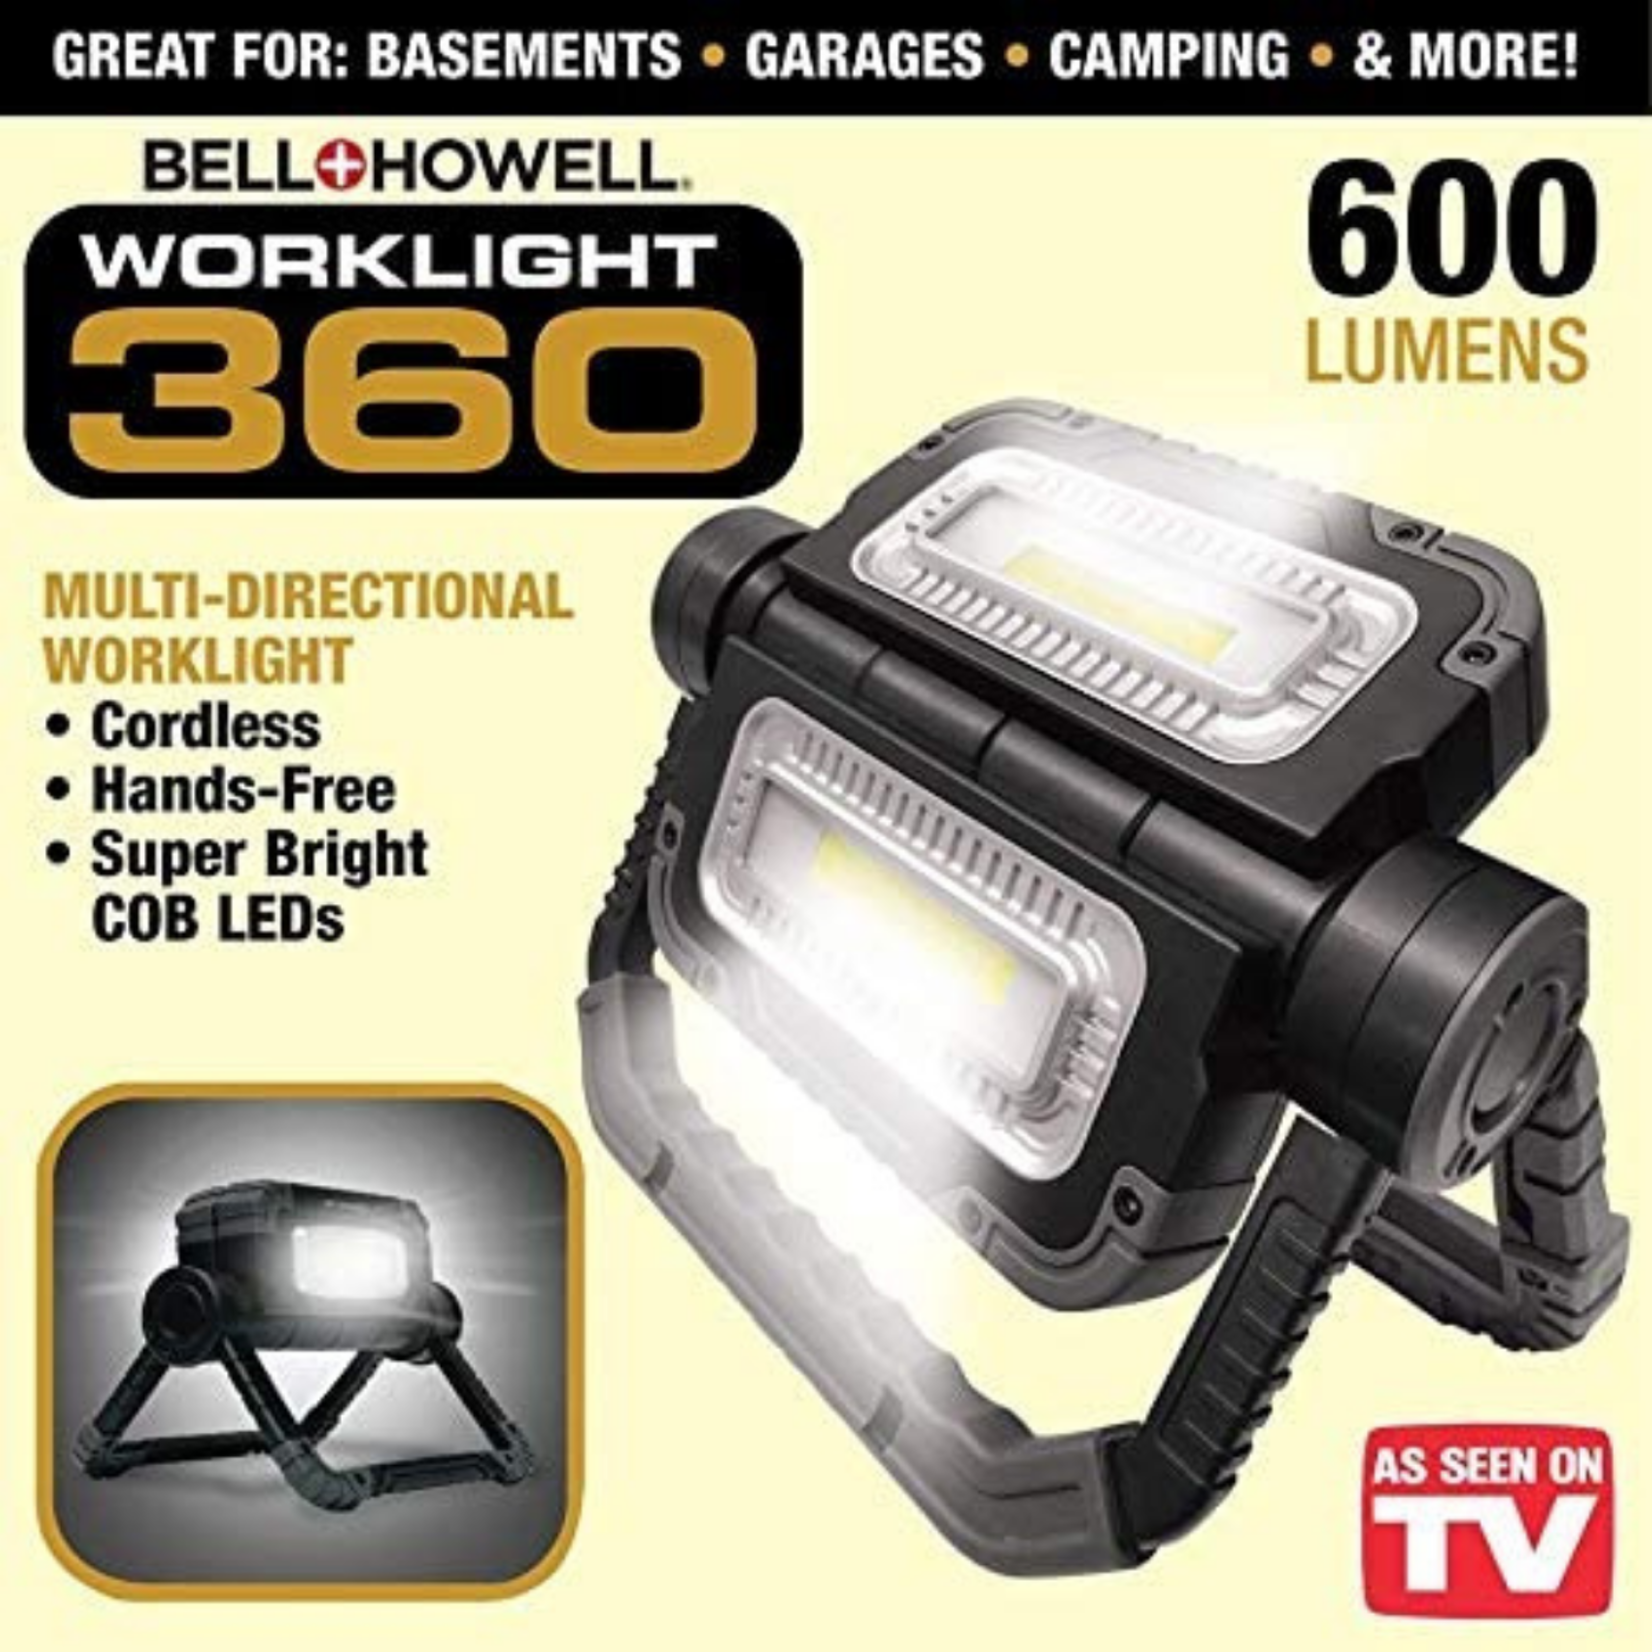 Worklight 360